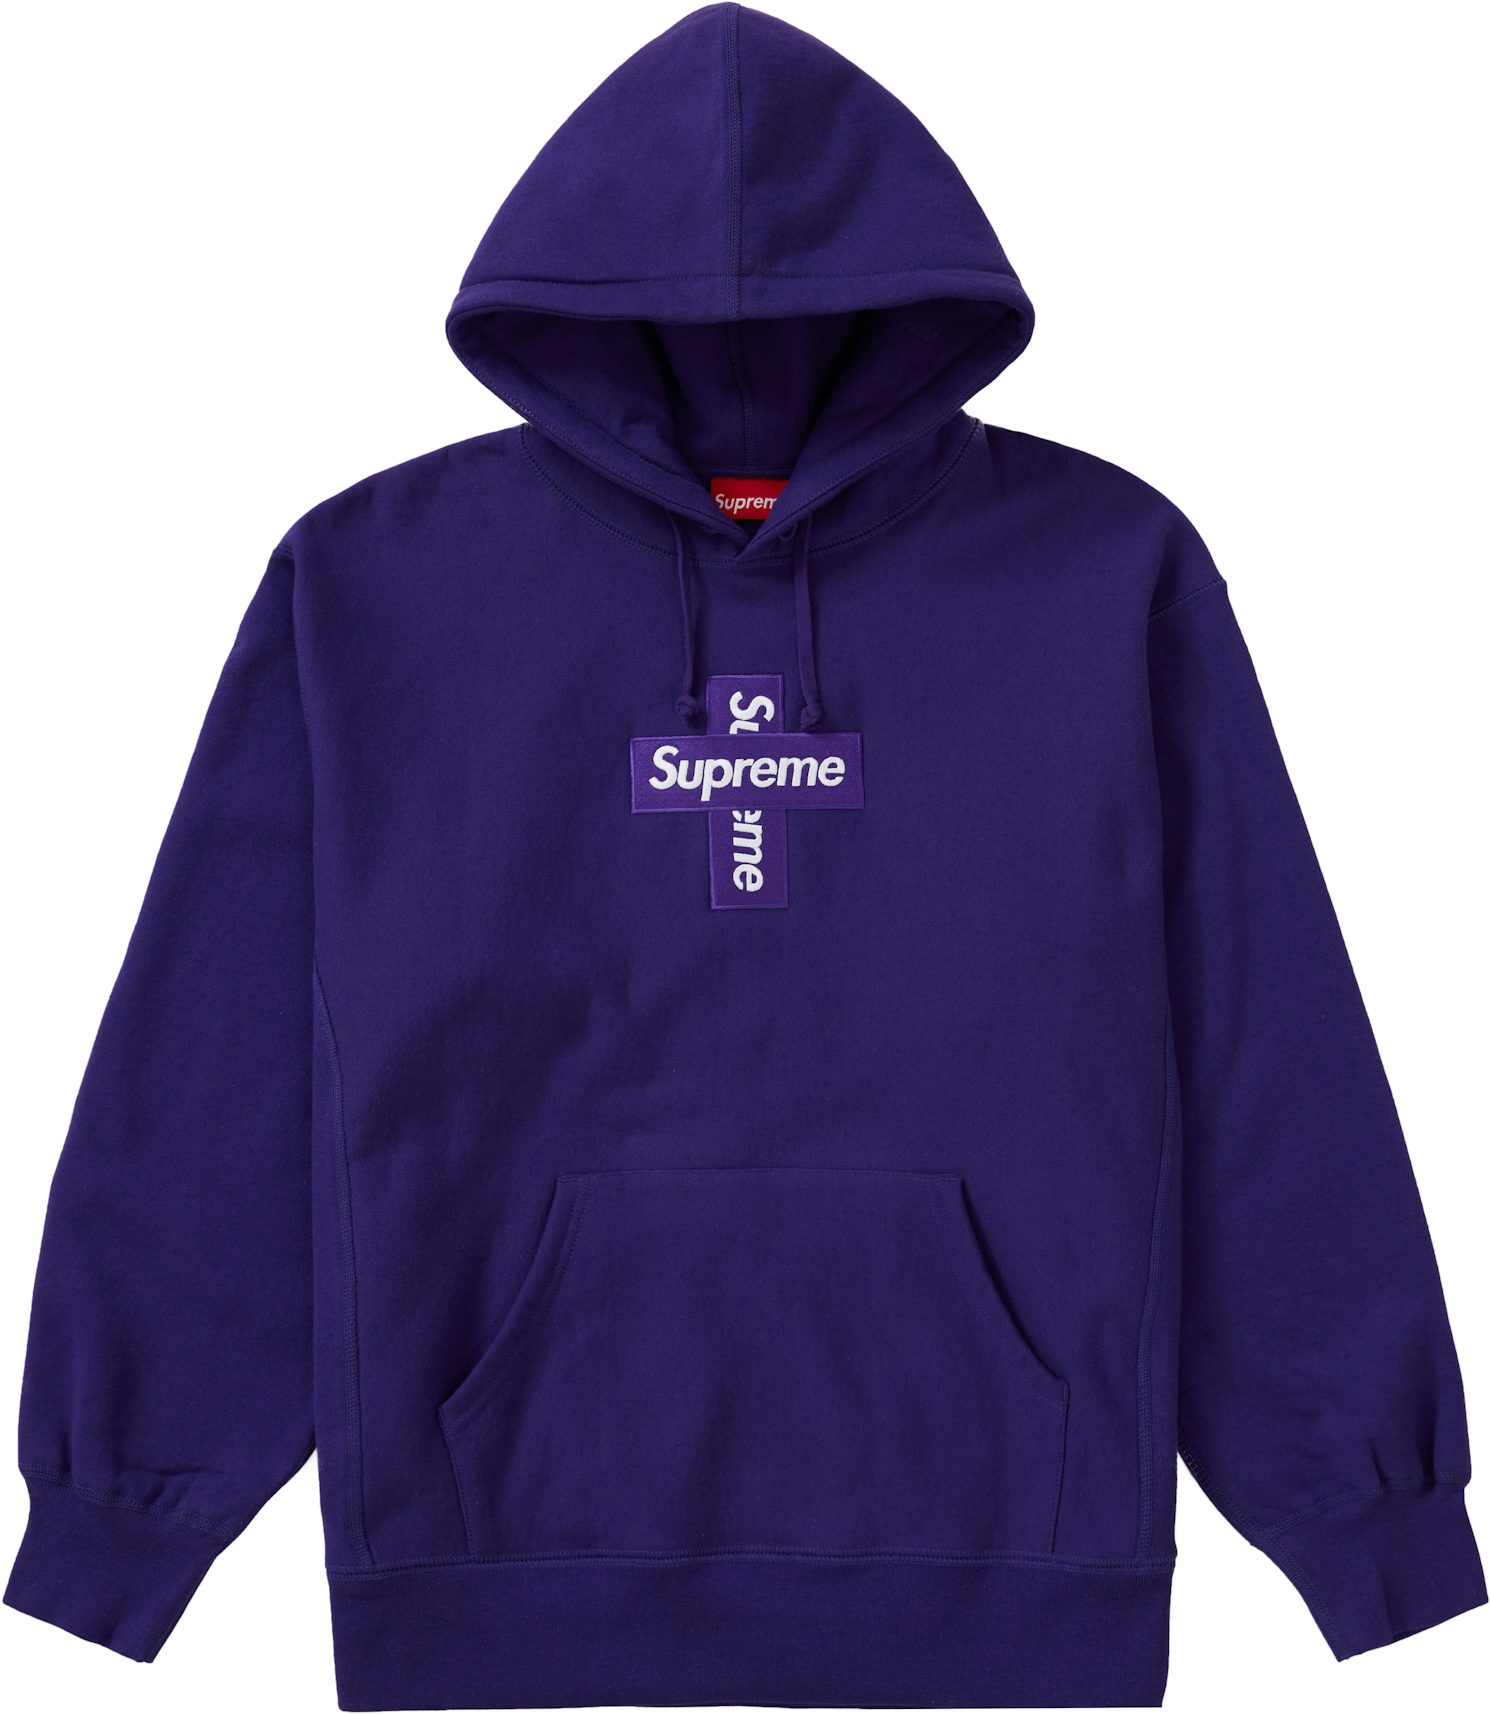 Supreme FW17 Box Logo (Bogo) Hoodie - Red Purple - Size XL - Pre